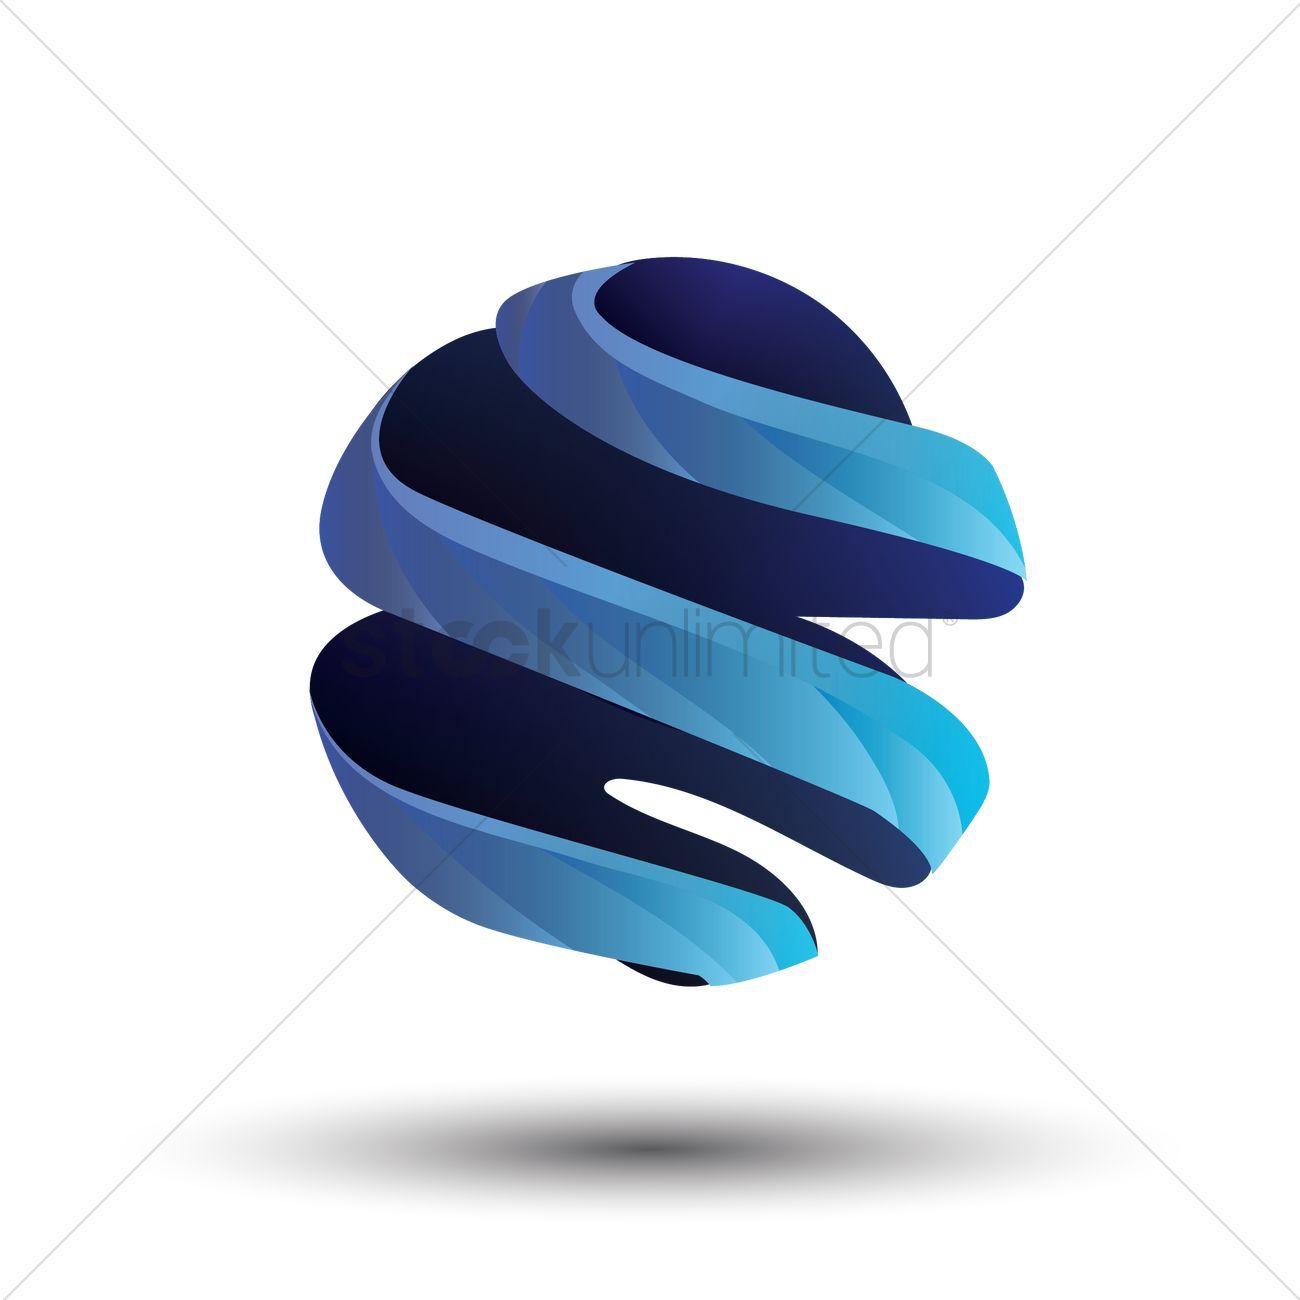 Spherical Logo - Abstract spherical logo Vector Image